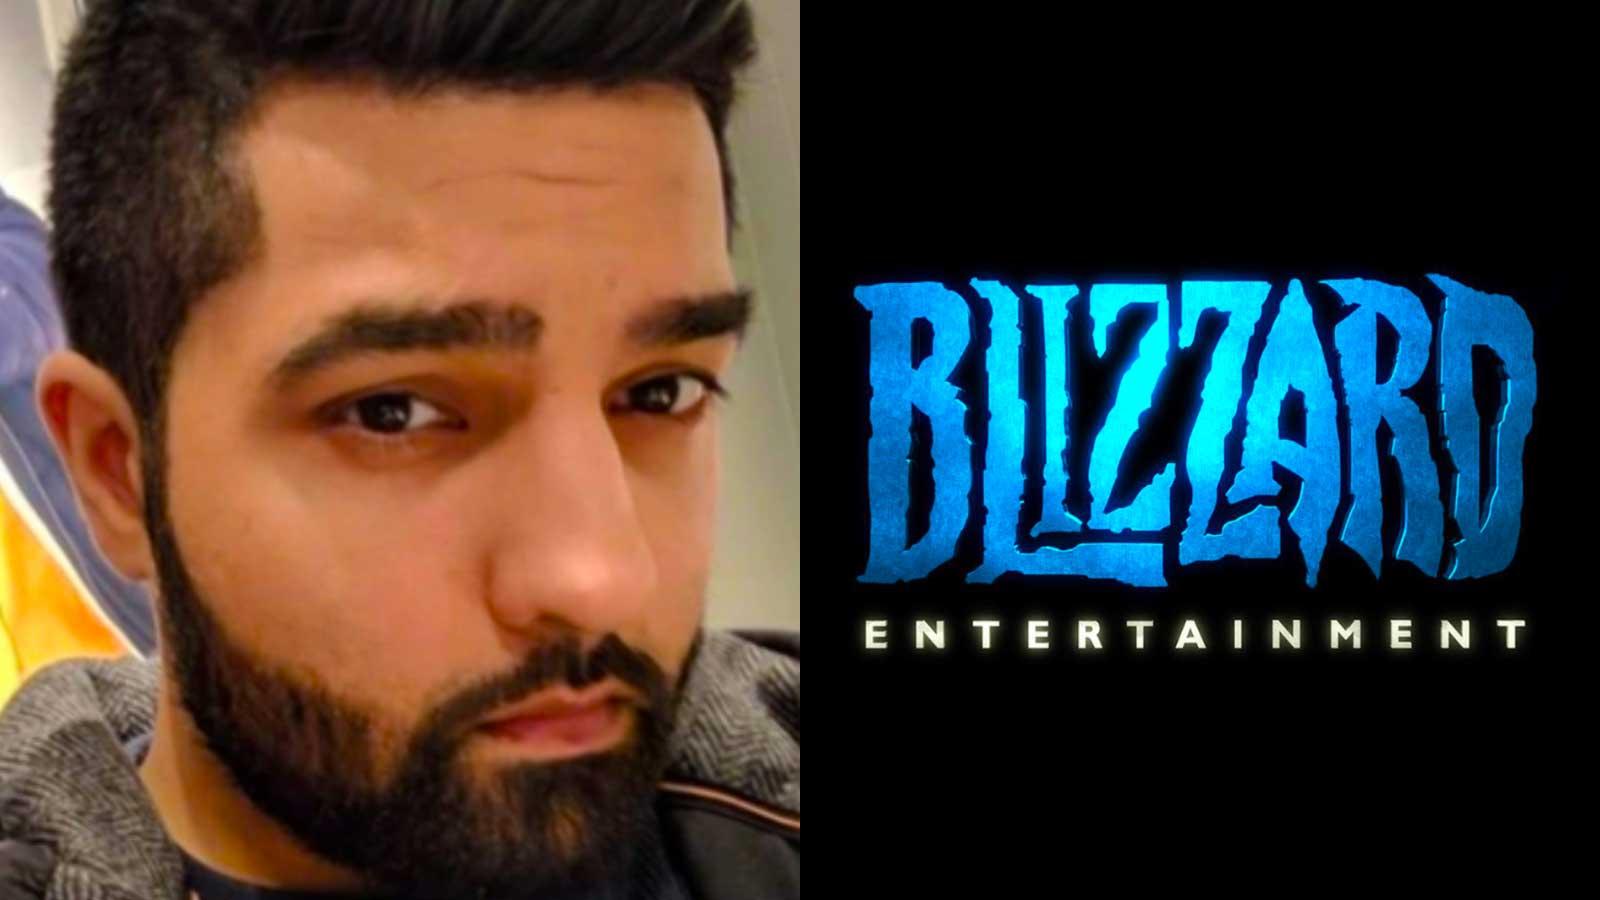 LIRIK slams Blizzard Entertainment